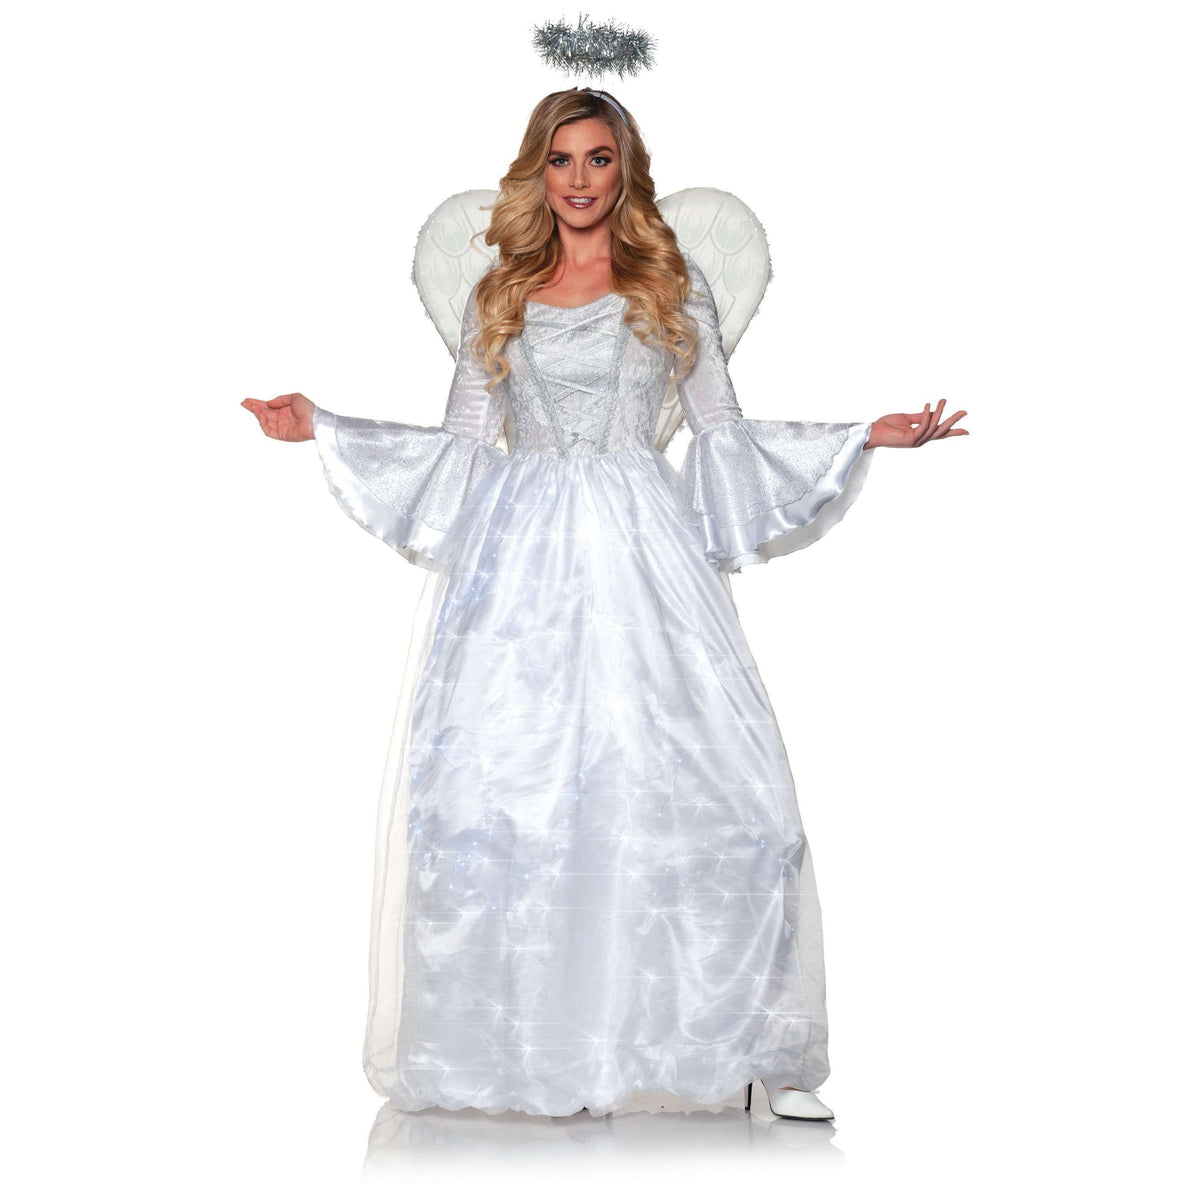 Heavenly White Angel Light Up Dress Women's Adult Costume w/ Wings & Halo